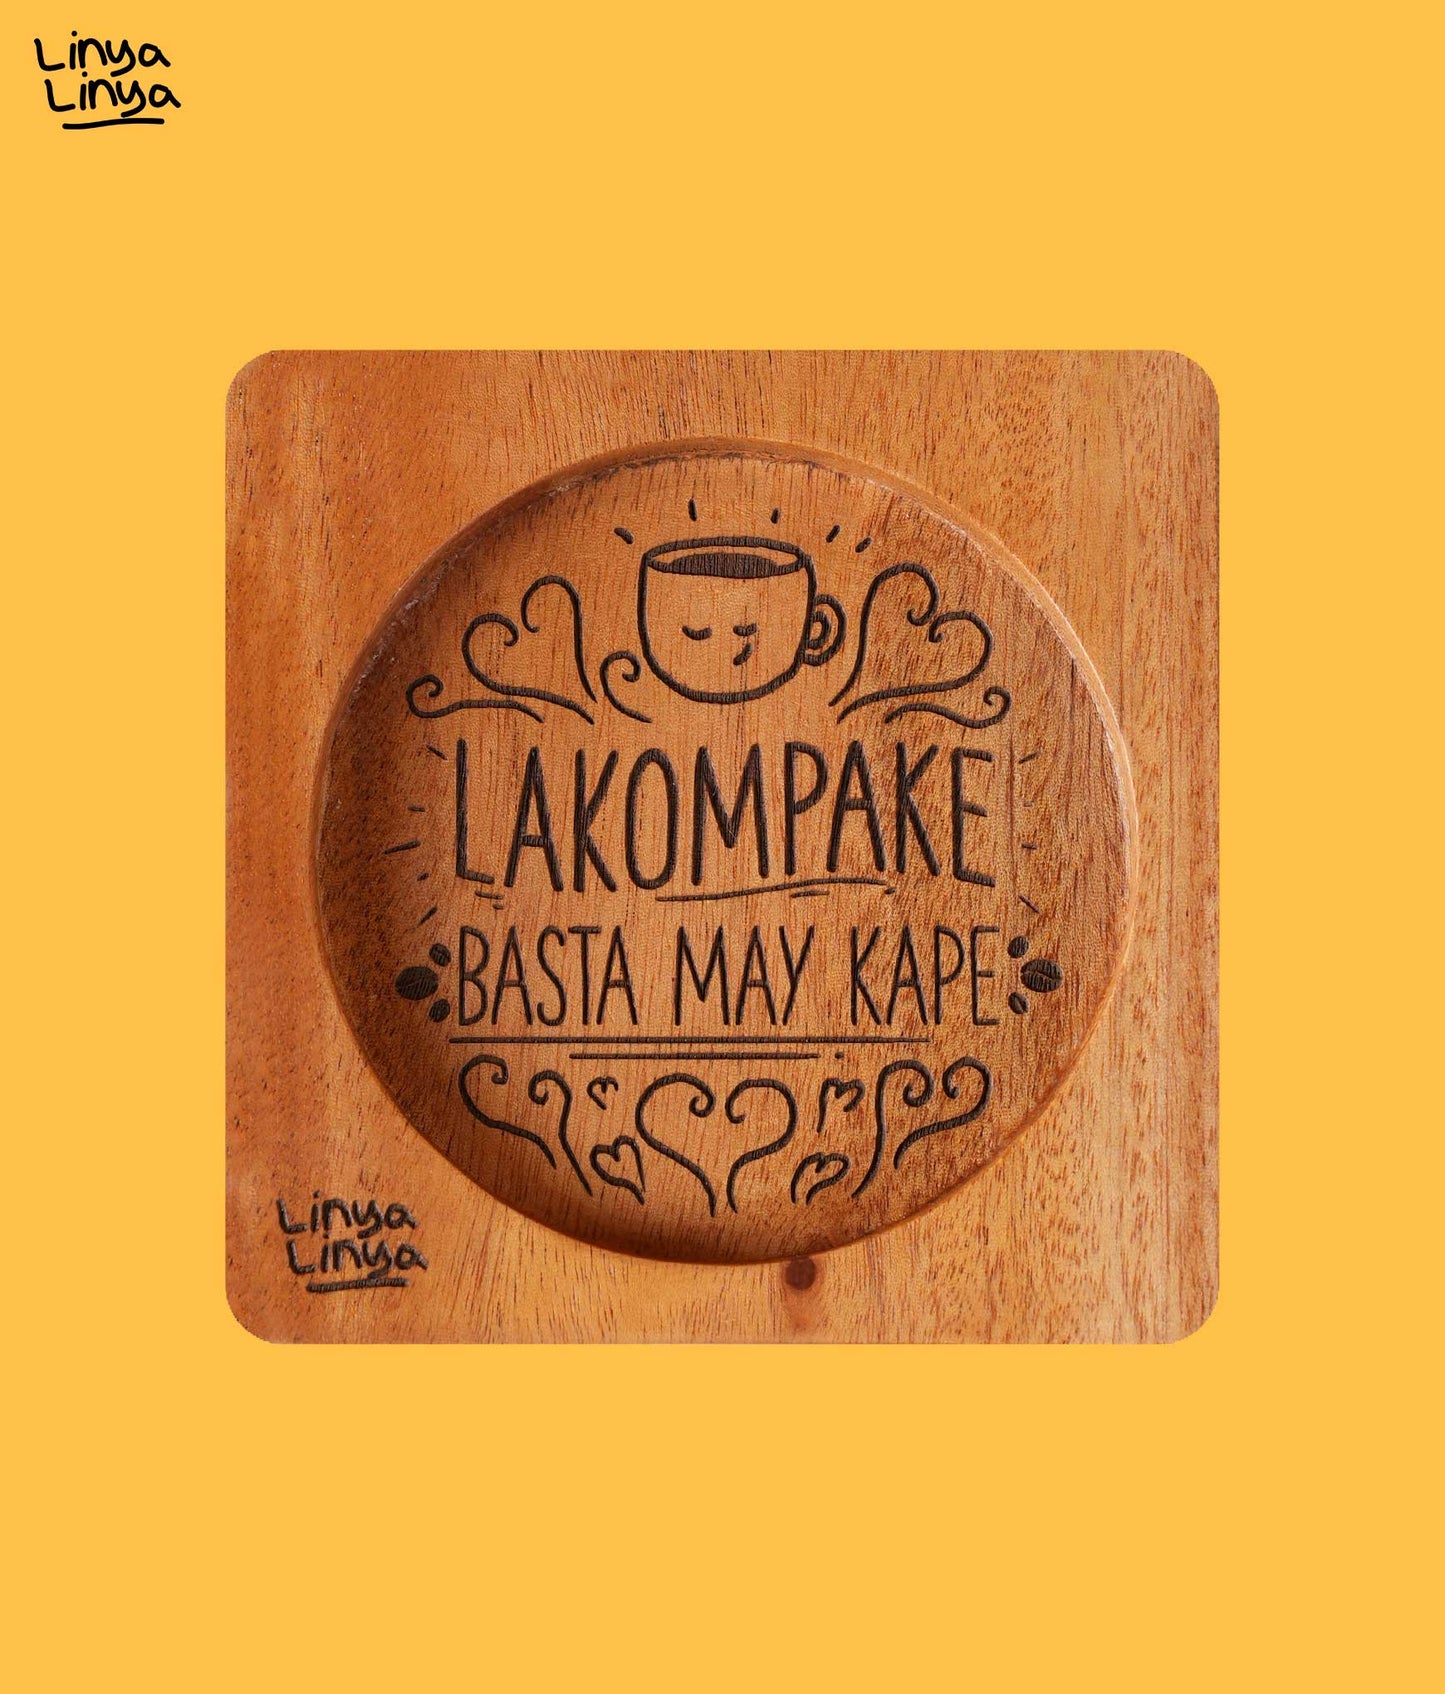 Coaster: Lakompake Basta May Kape.